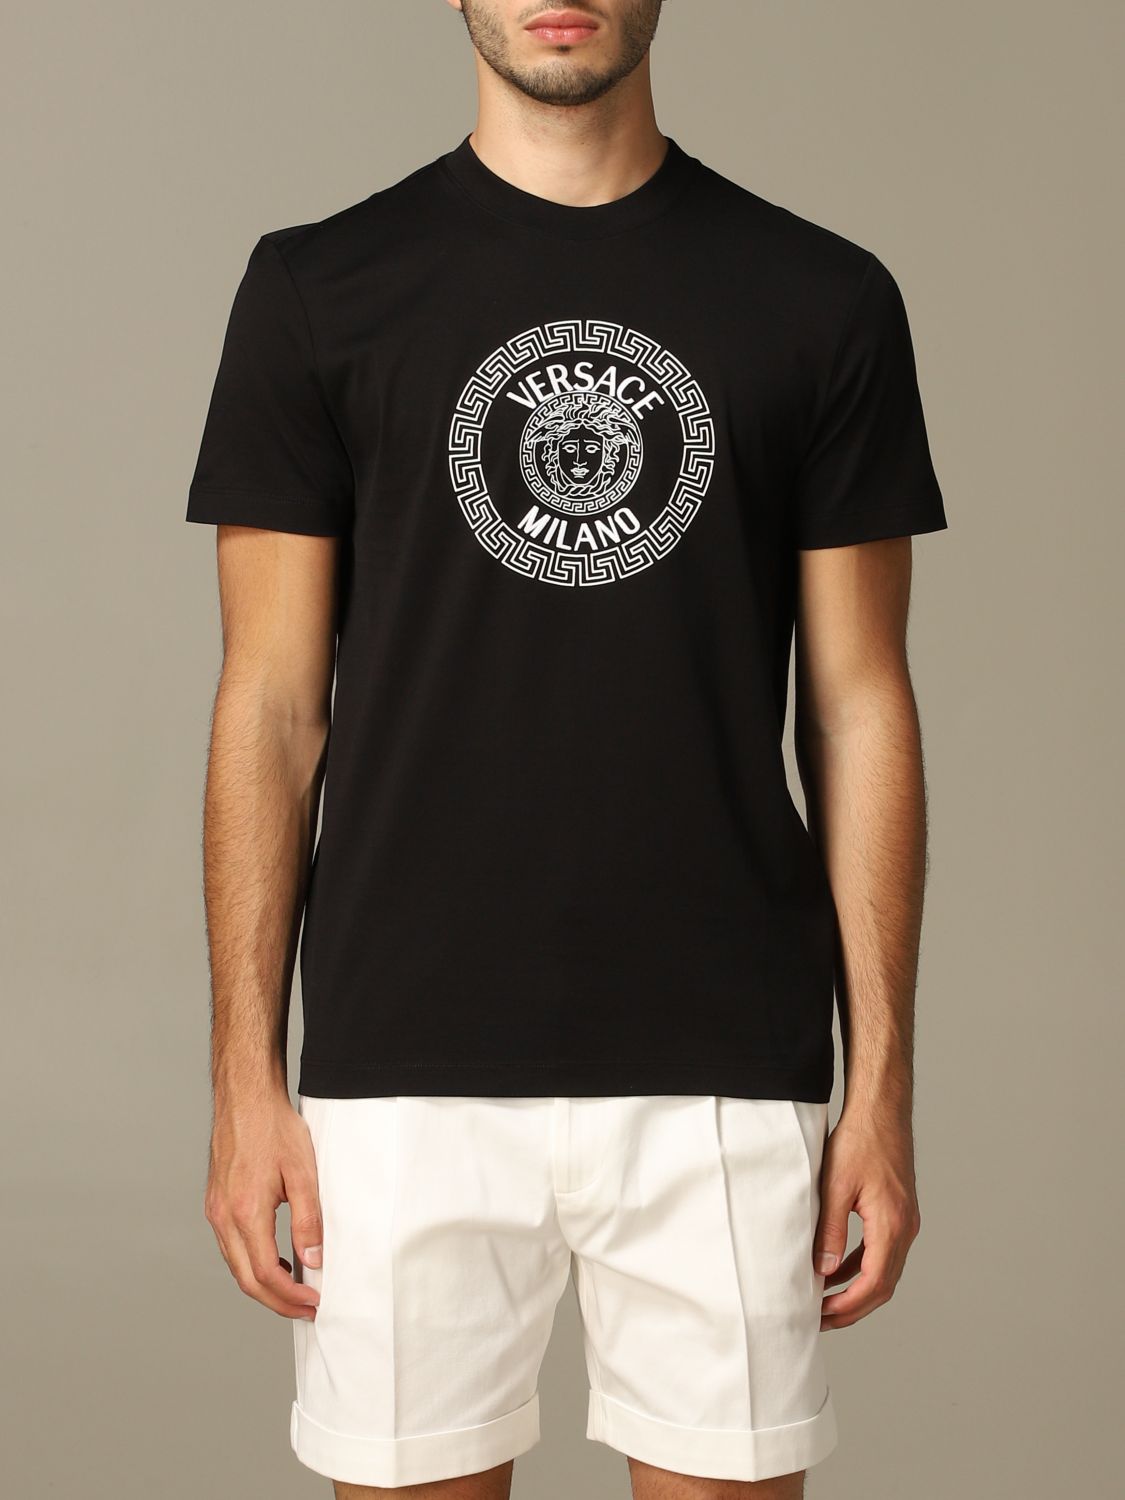 VERSACE: short-sleeved T-shirt with Medusa head print - Black | Versace ...